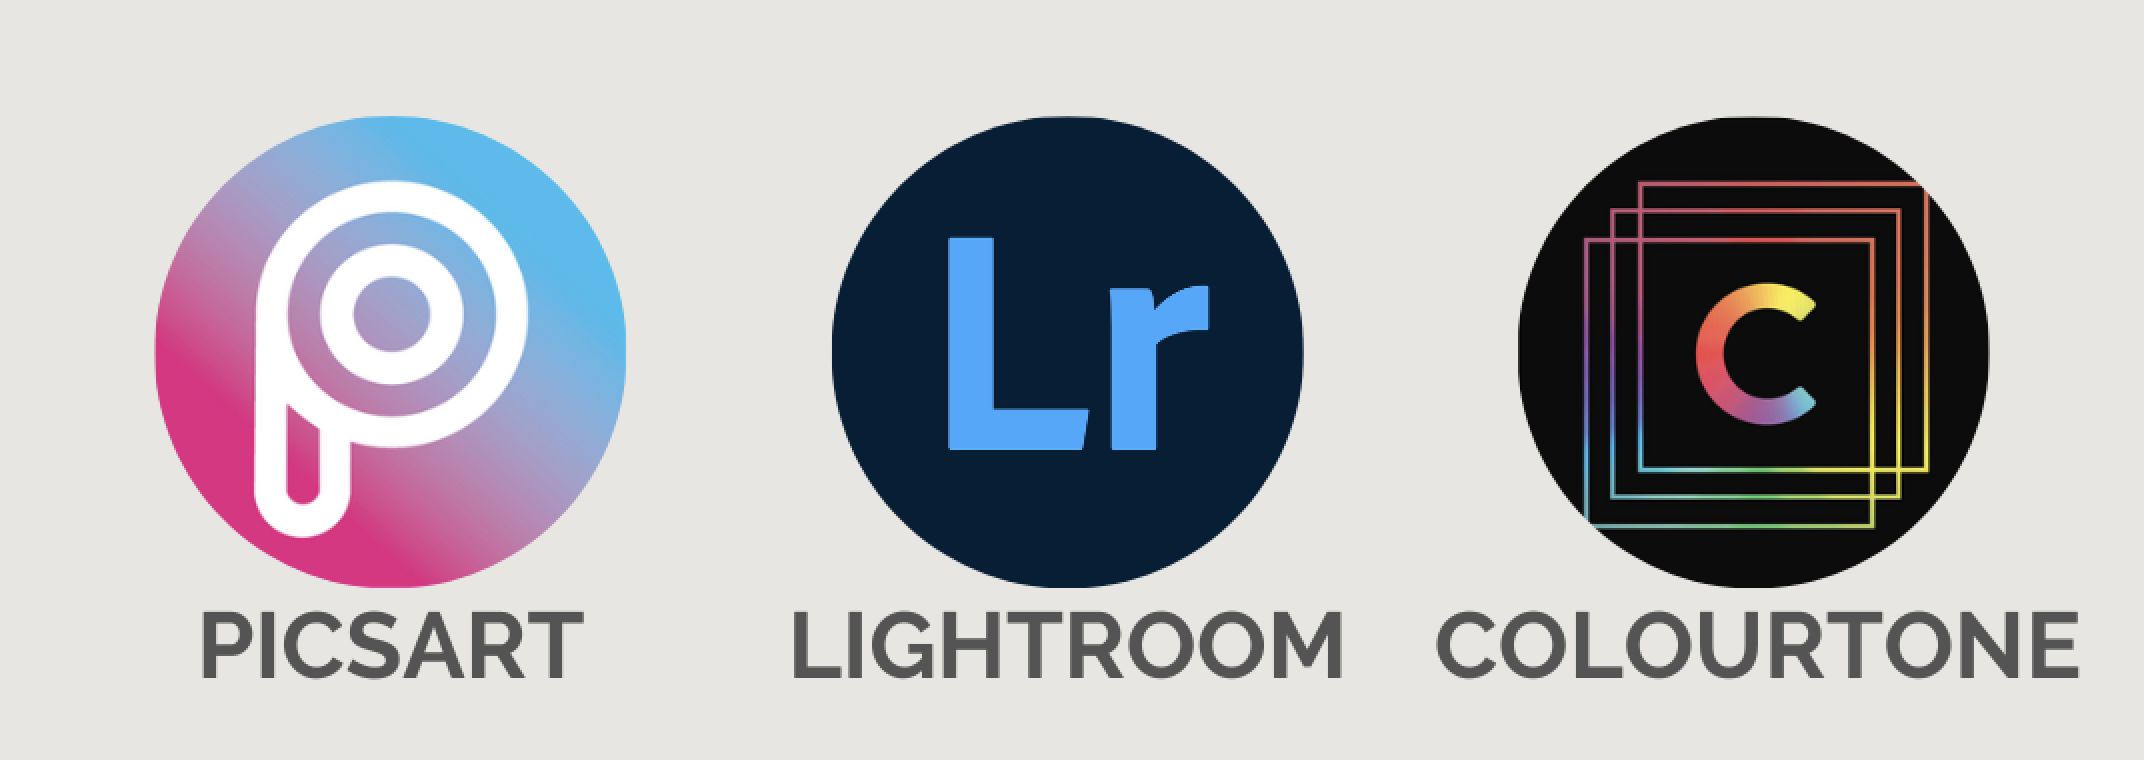 app gratuitas para editar fotos picsart Lightroom colourtune